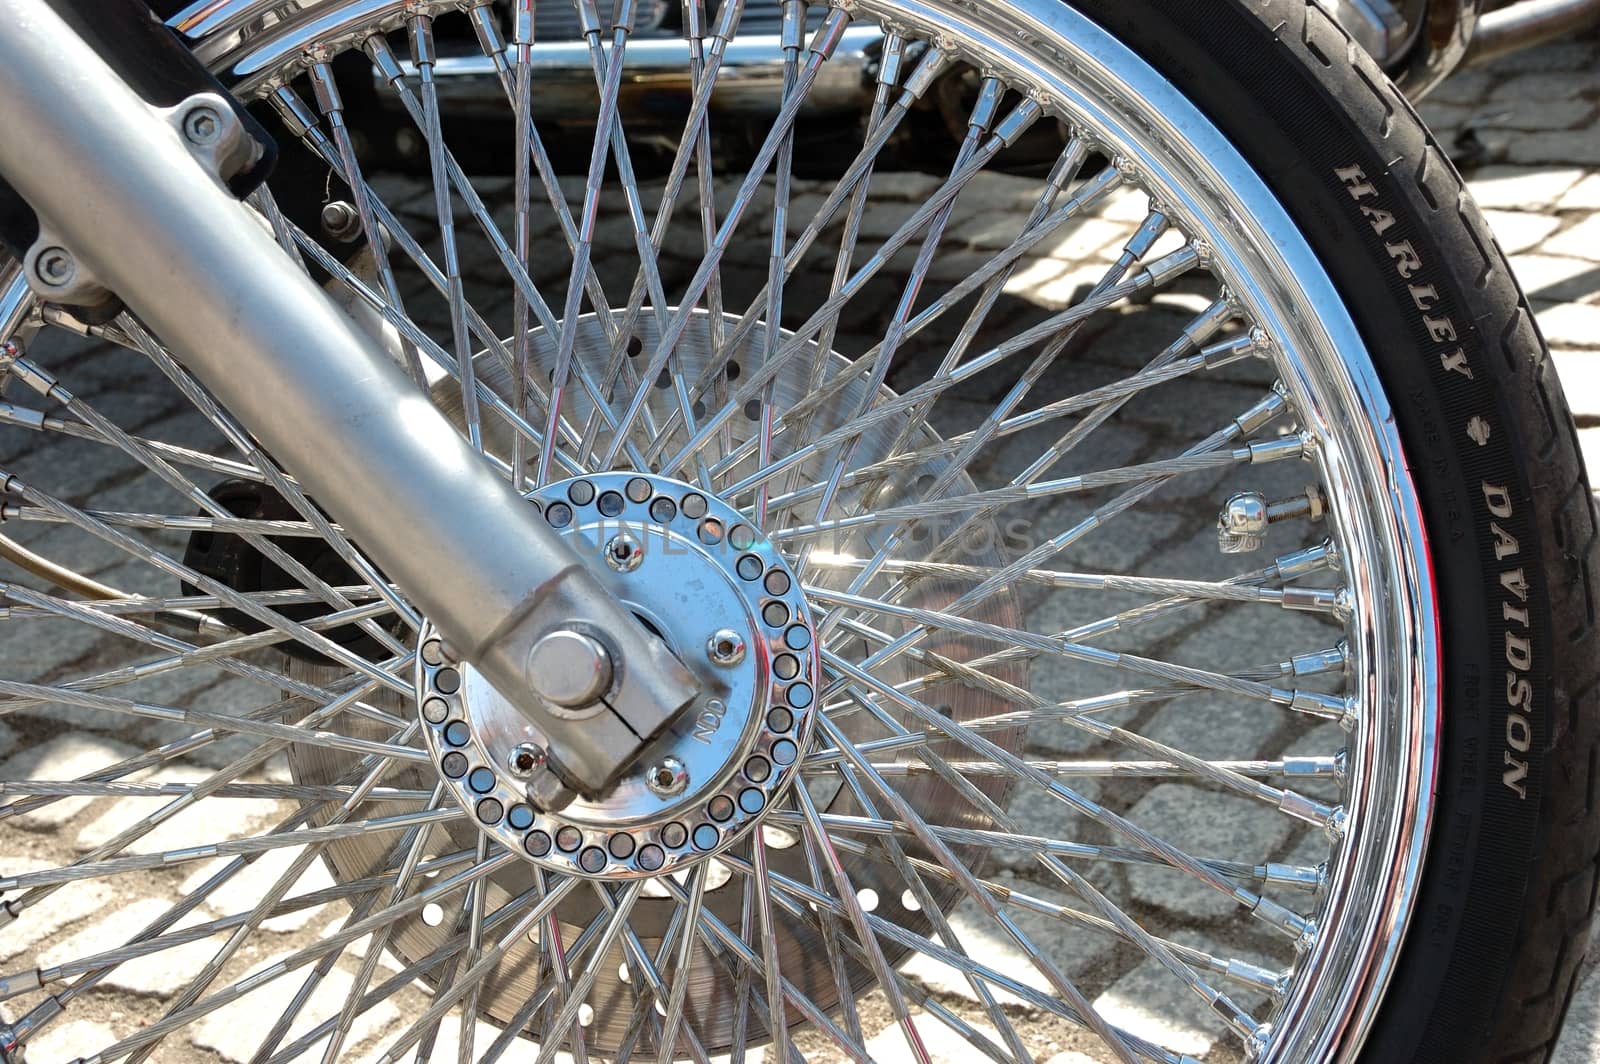 Closeup photo of motorcycle wheel with shiny spokes and metallic rim.